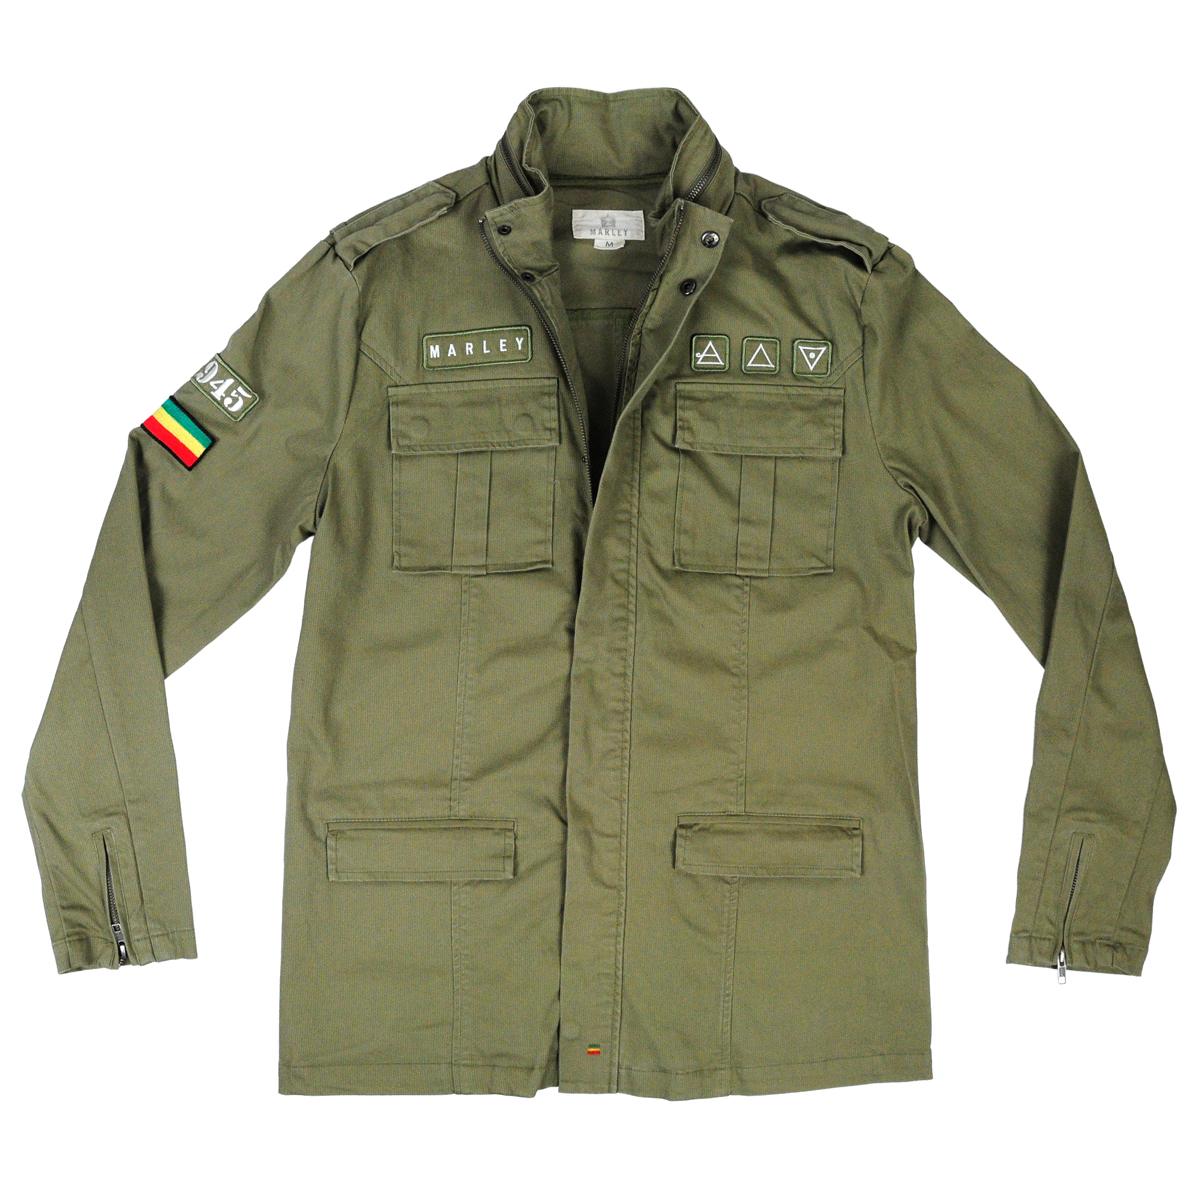 Marley - M65 Jacket Military Olive Jacket - Men's